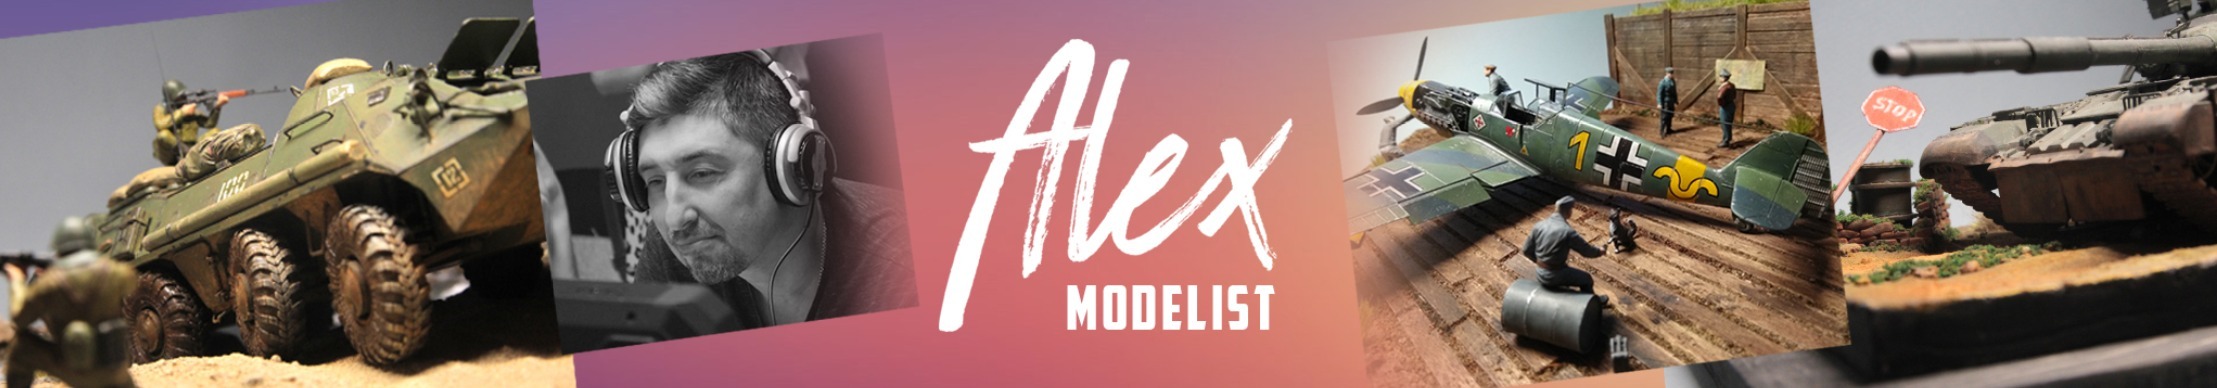 creator cover Alex Modelist